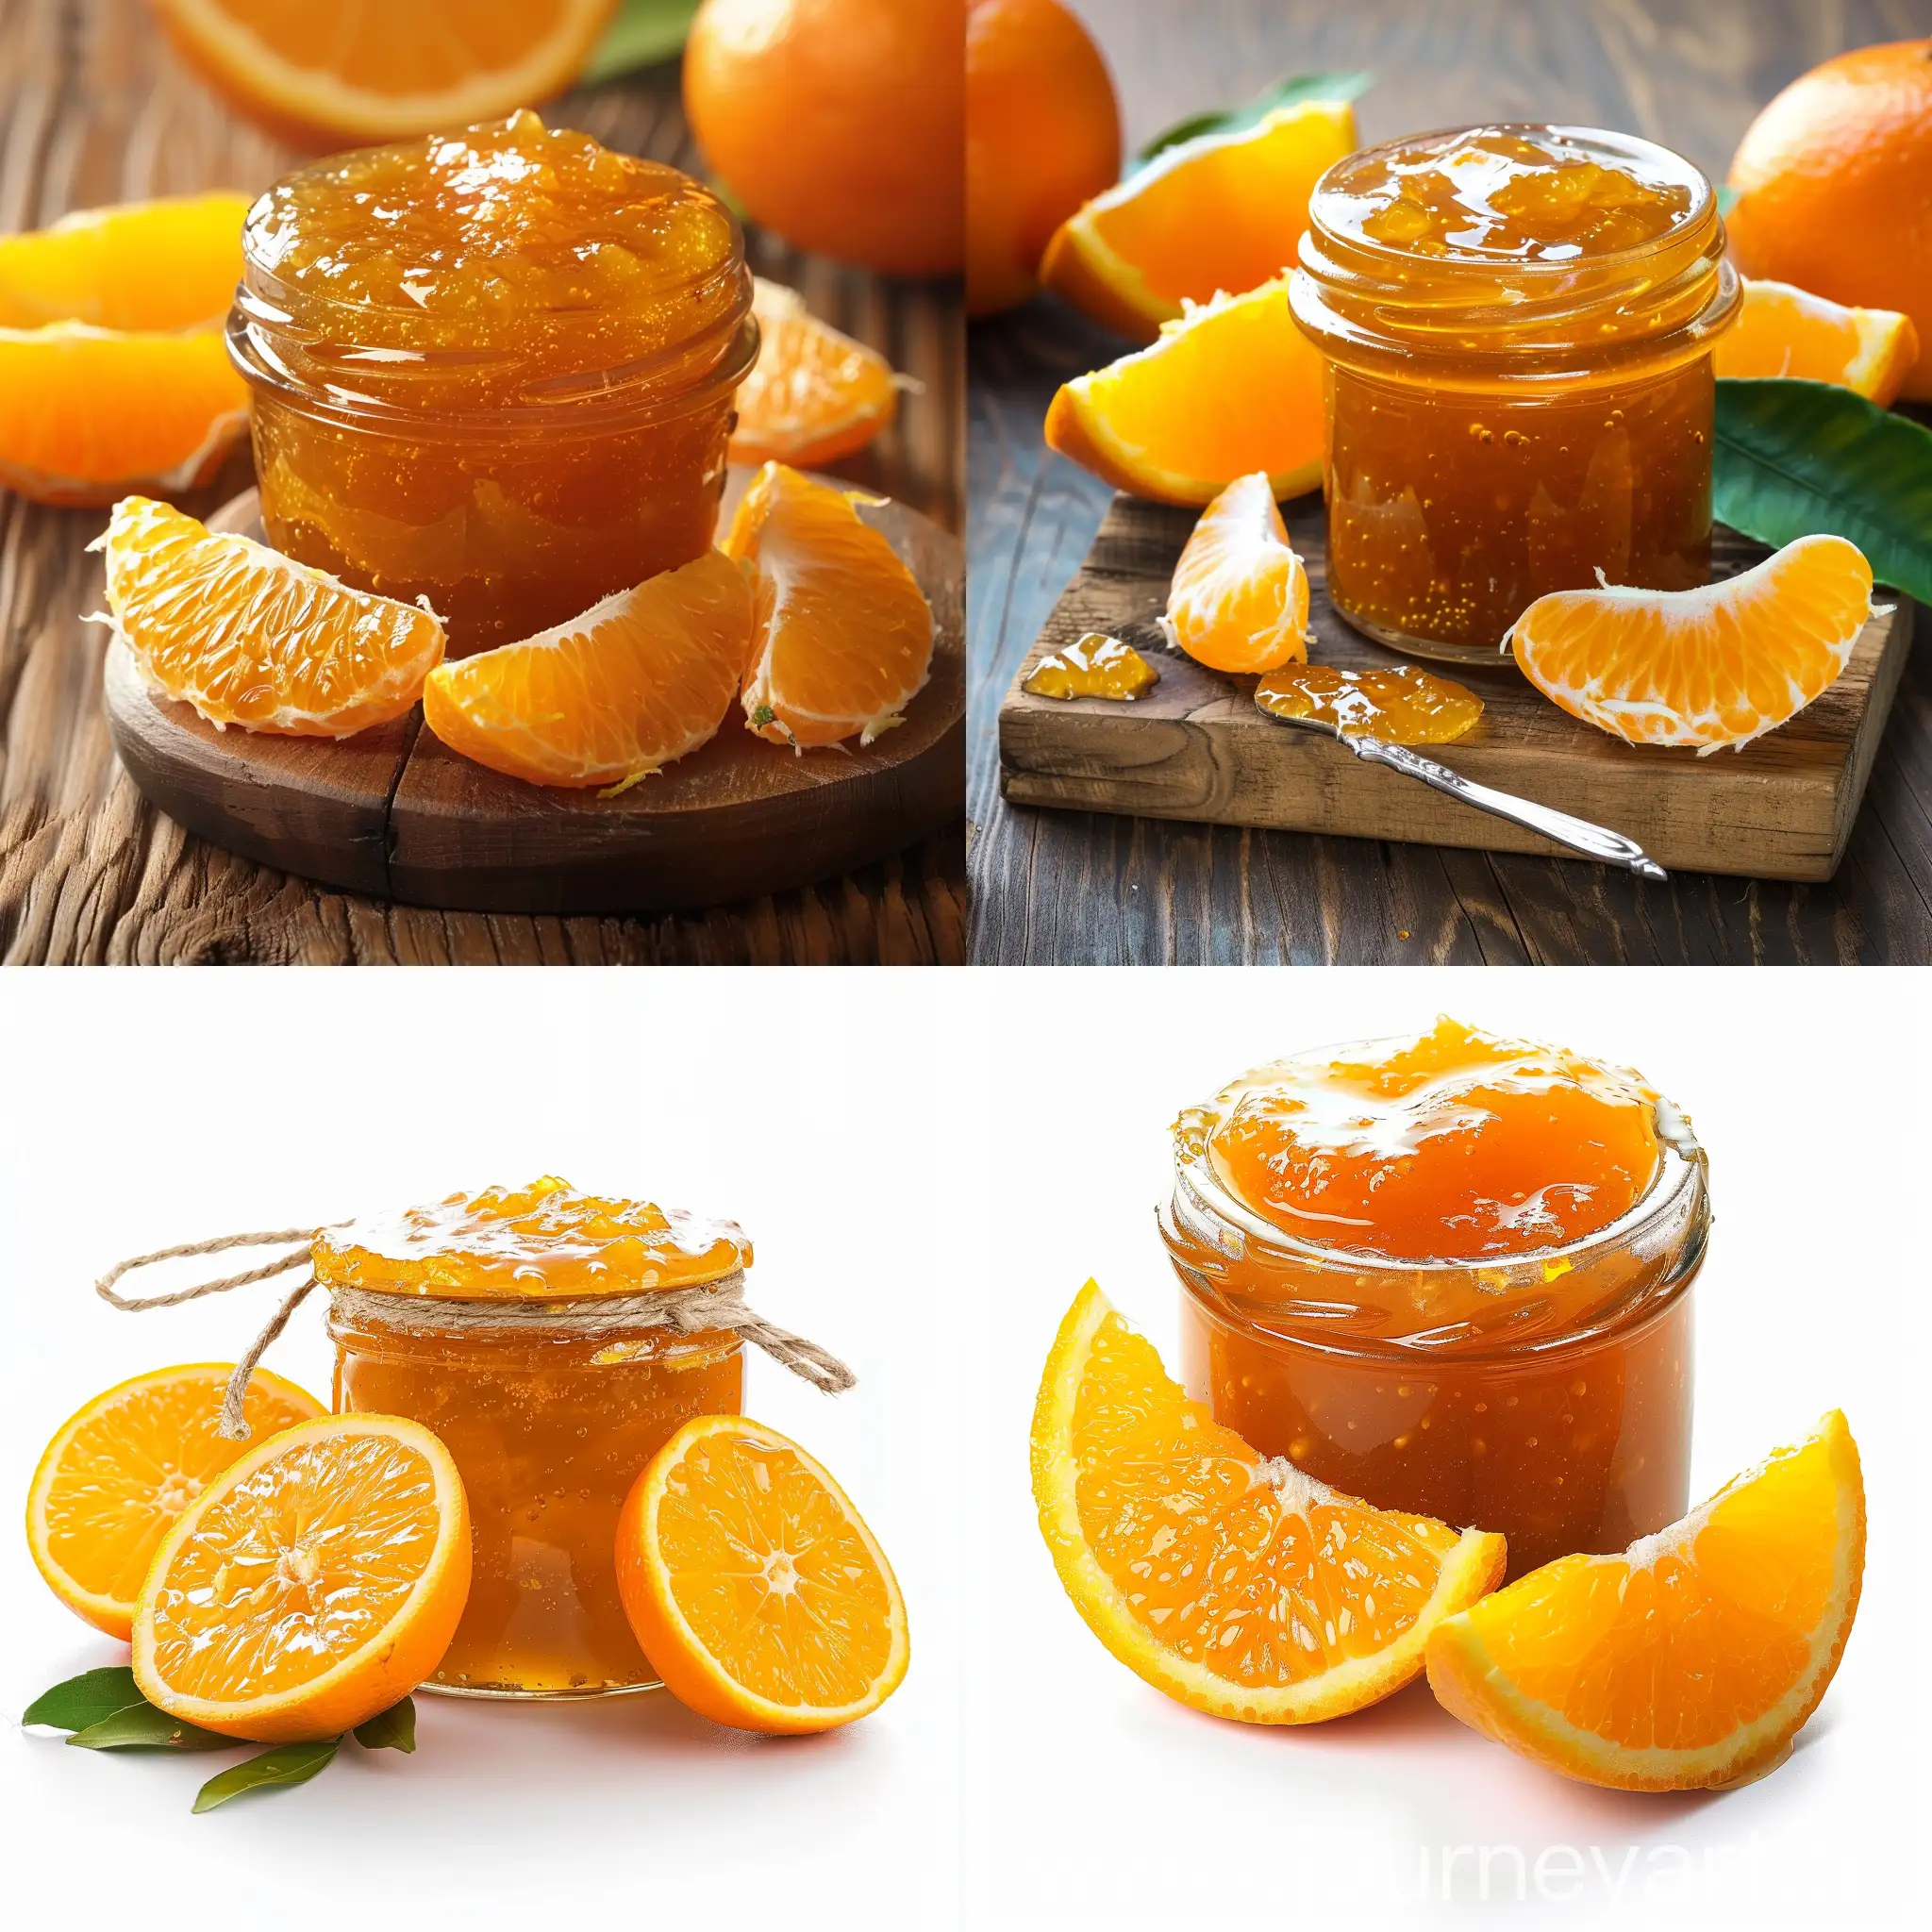 jam from orange, webshop image